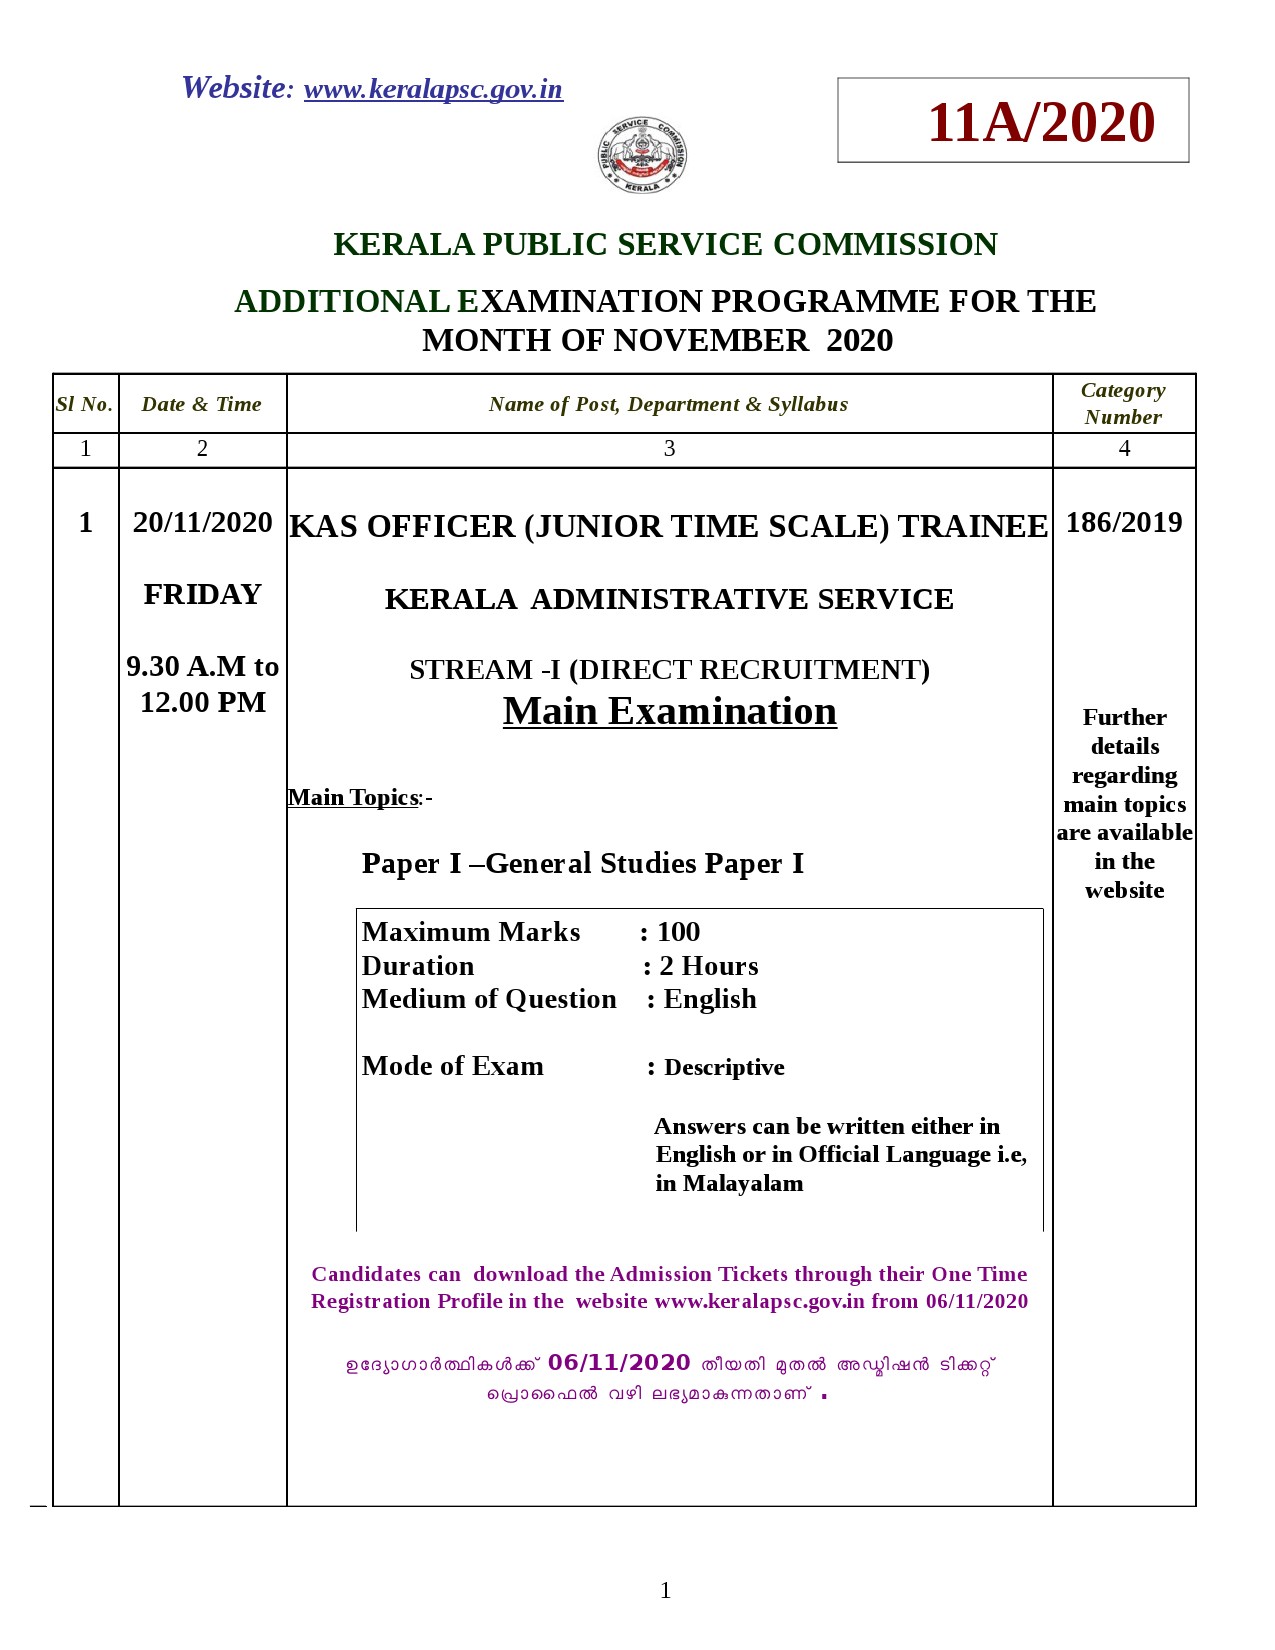 Kerala PSC Additional Exam for November 2020 - Notification Image 1